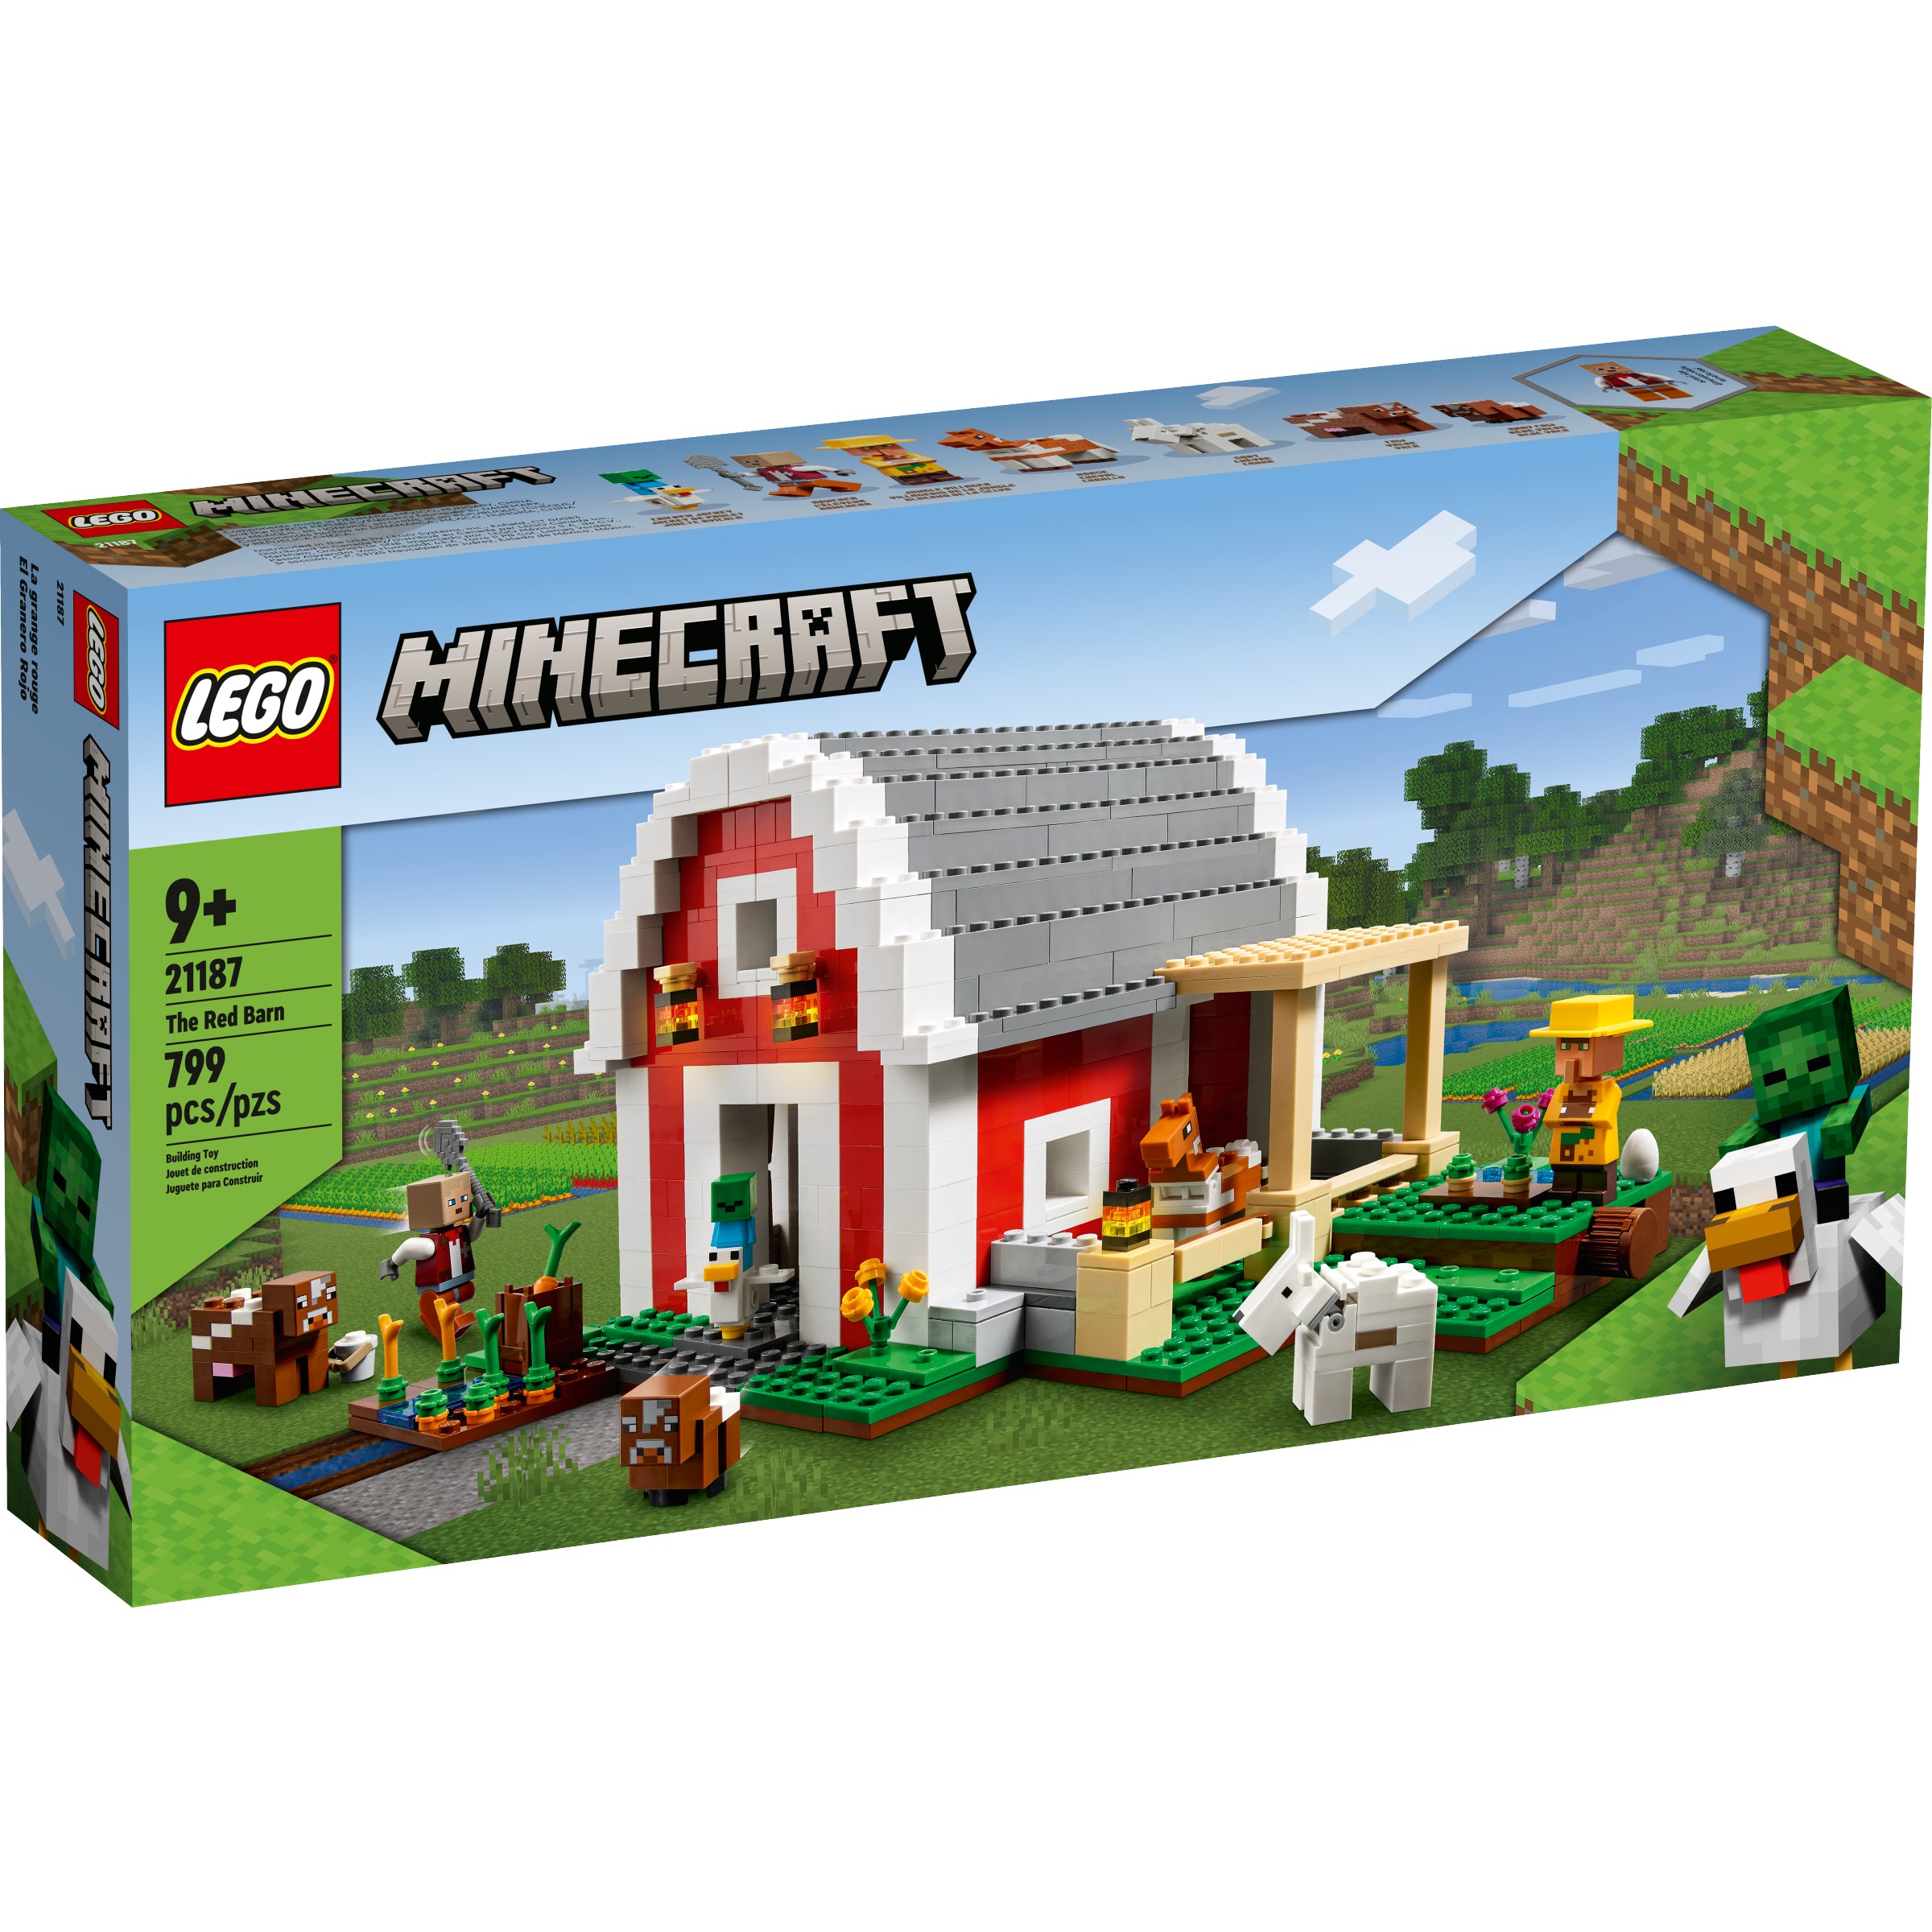 21187 Minecraft The Red Barn and Bricks